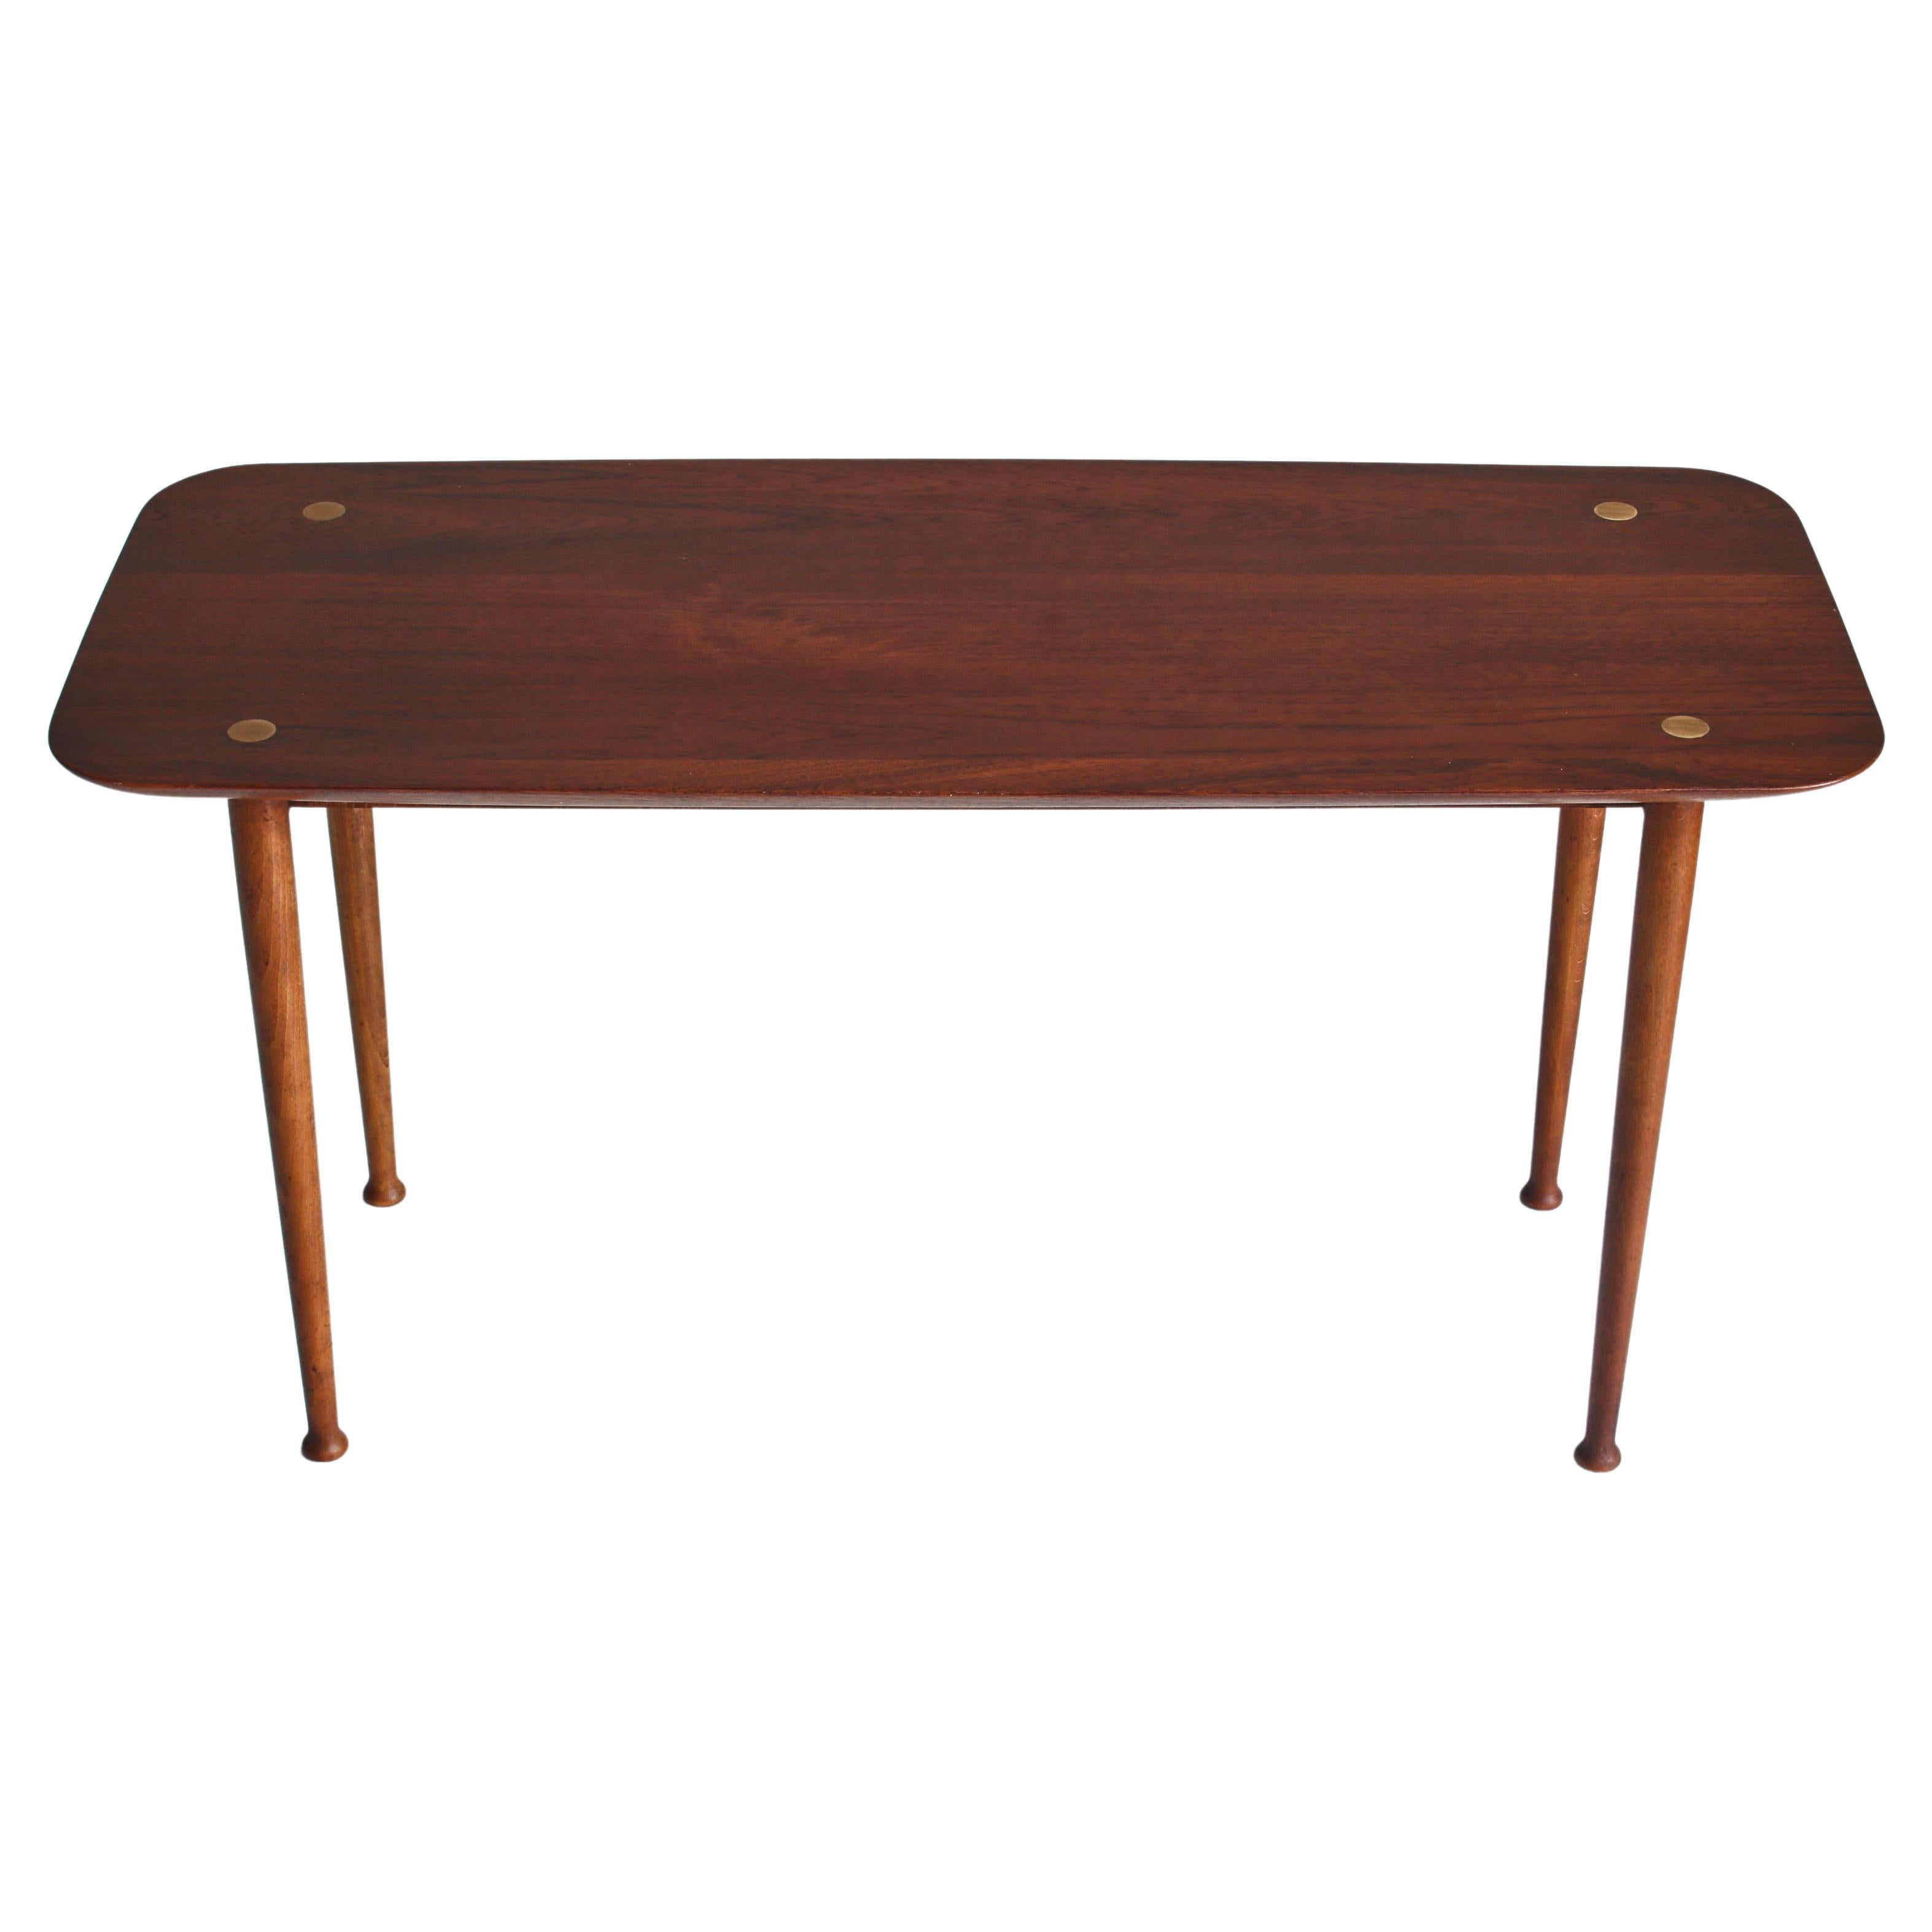 1950s Scandinavian Side Table by Danish Cabinetmaker in Teakwood and Beech